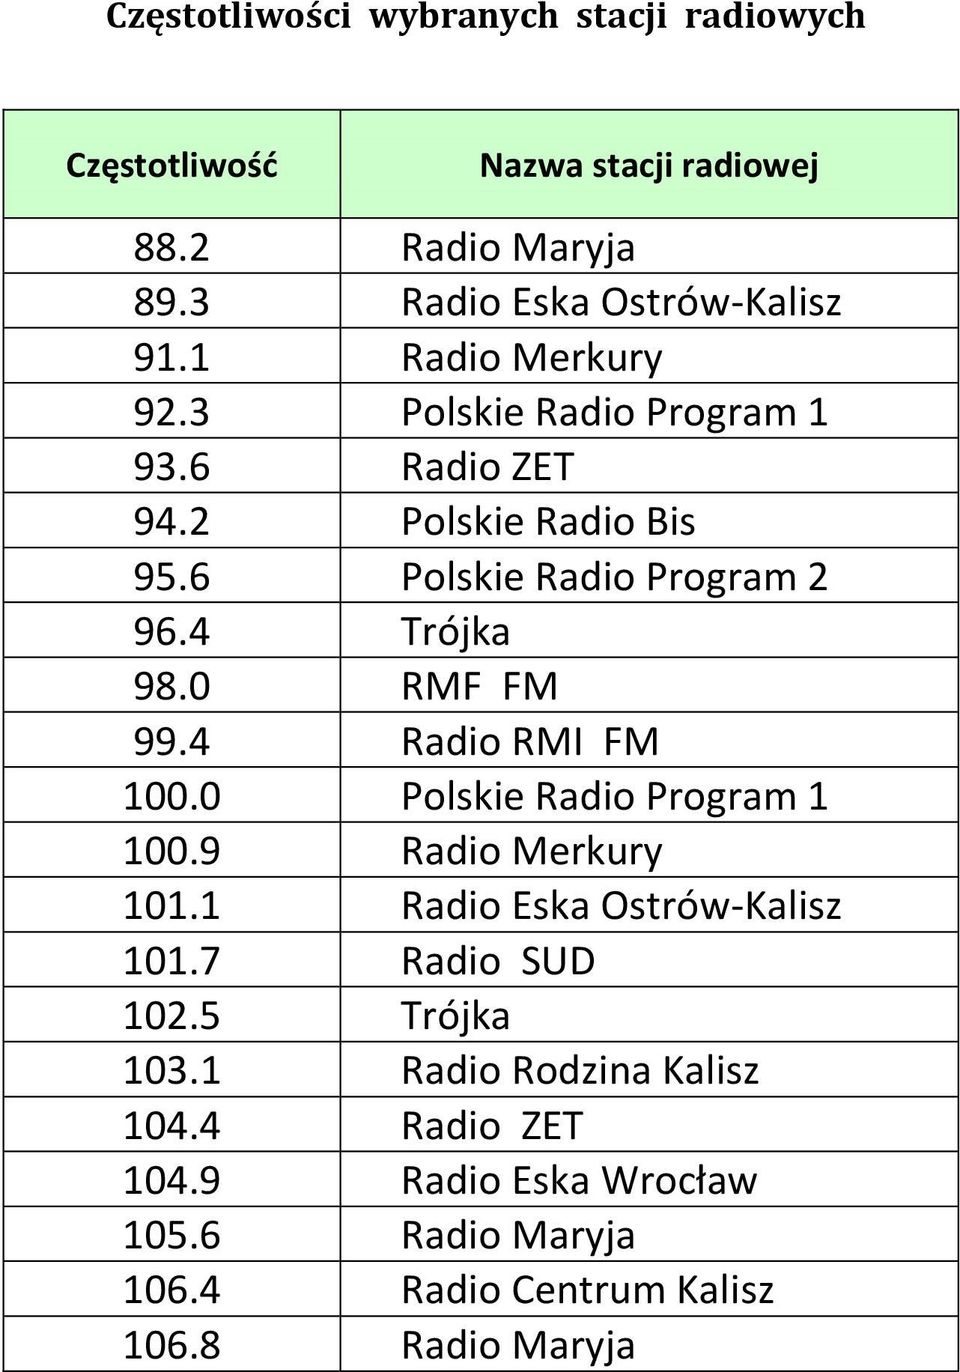 0 RMF FM 99.4 Radio RMI FM 100.0 Polskie Radio Program 1 100.9 Radio Merkury 101.1 Radio Eska Ostrów-Kalisz 101.7 Radio SUD 102.